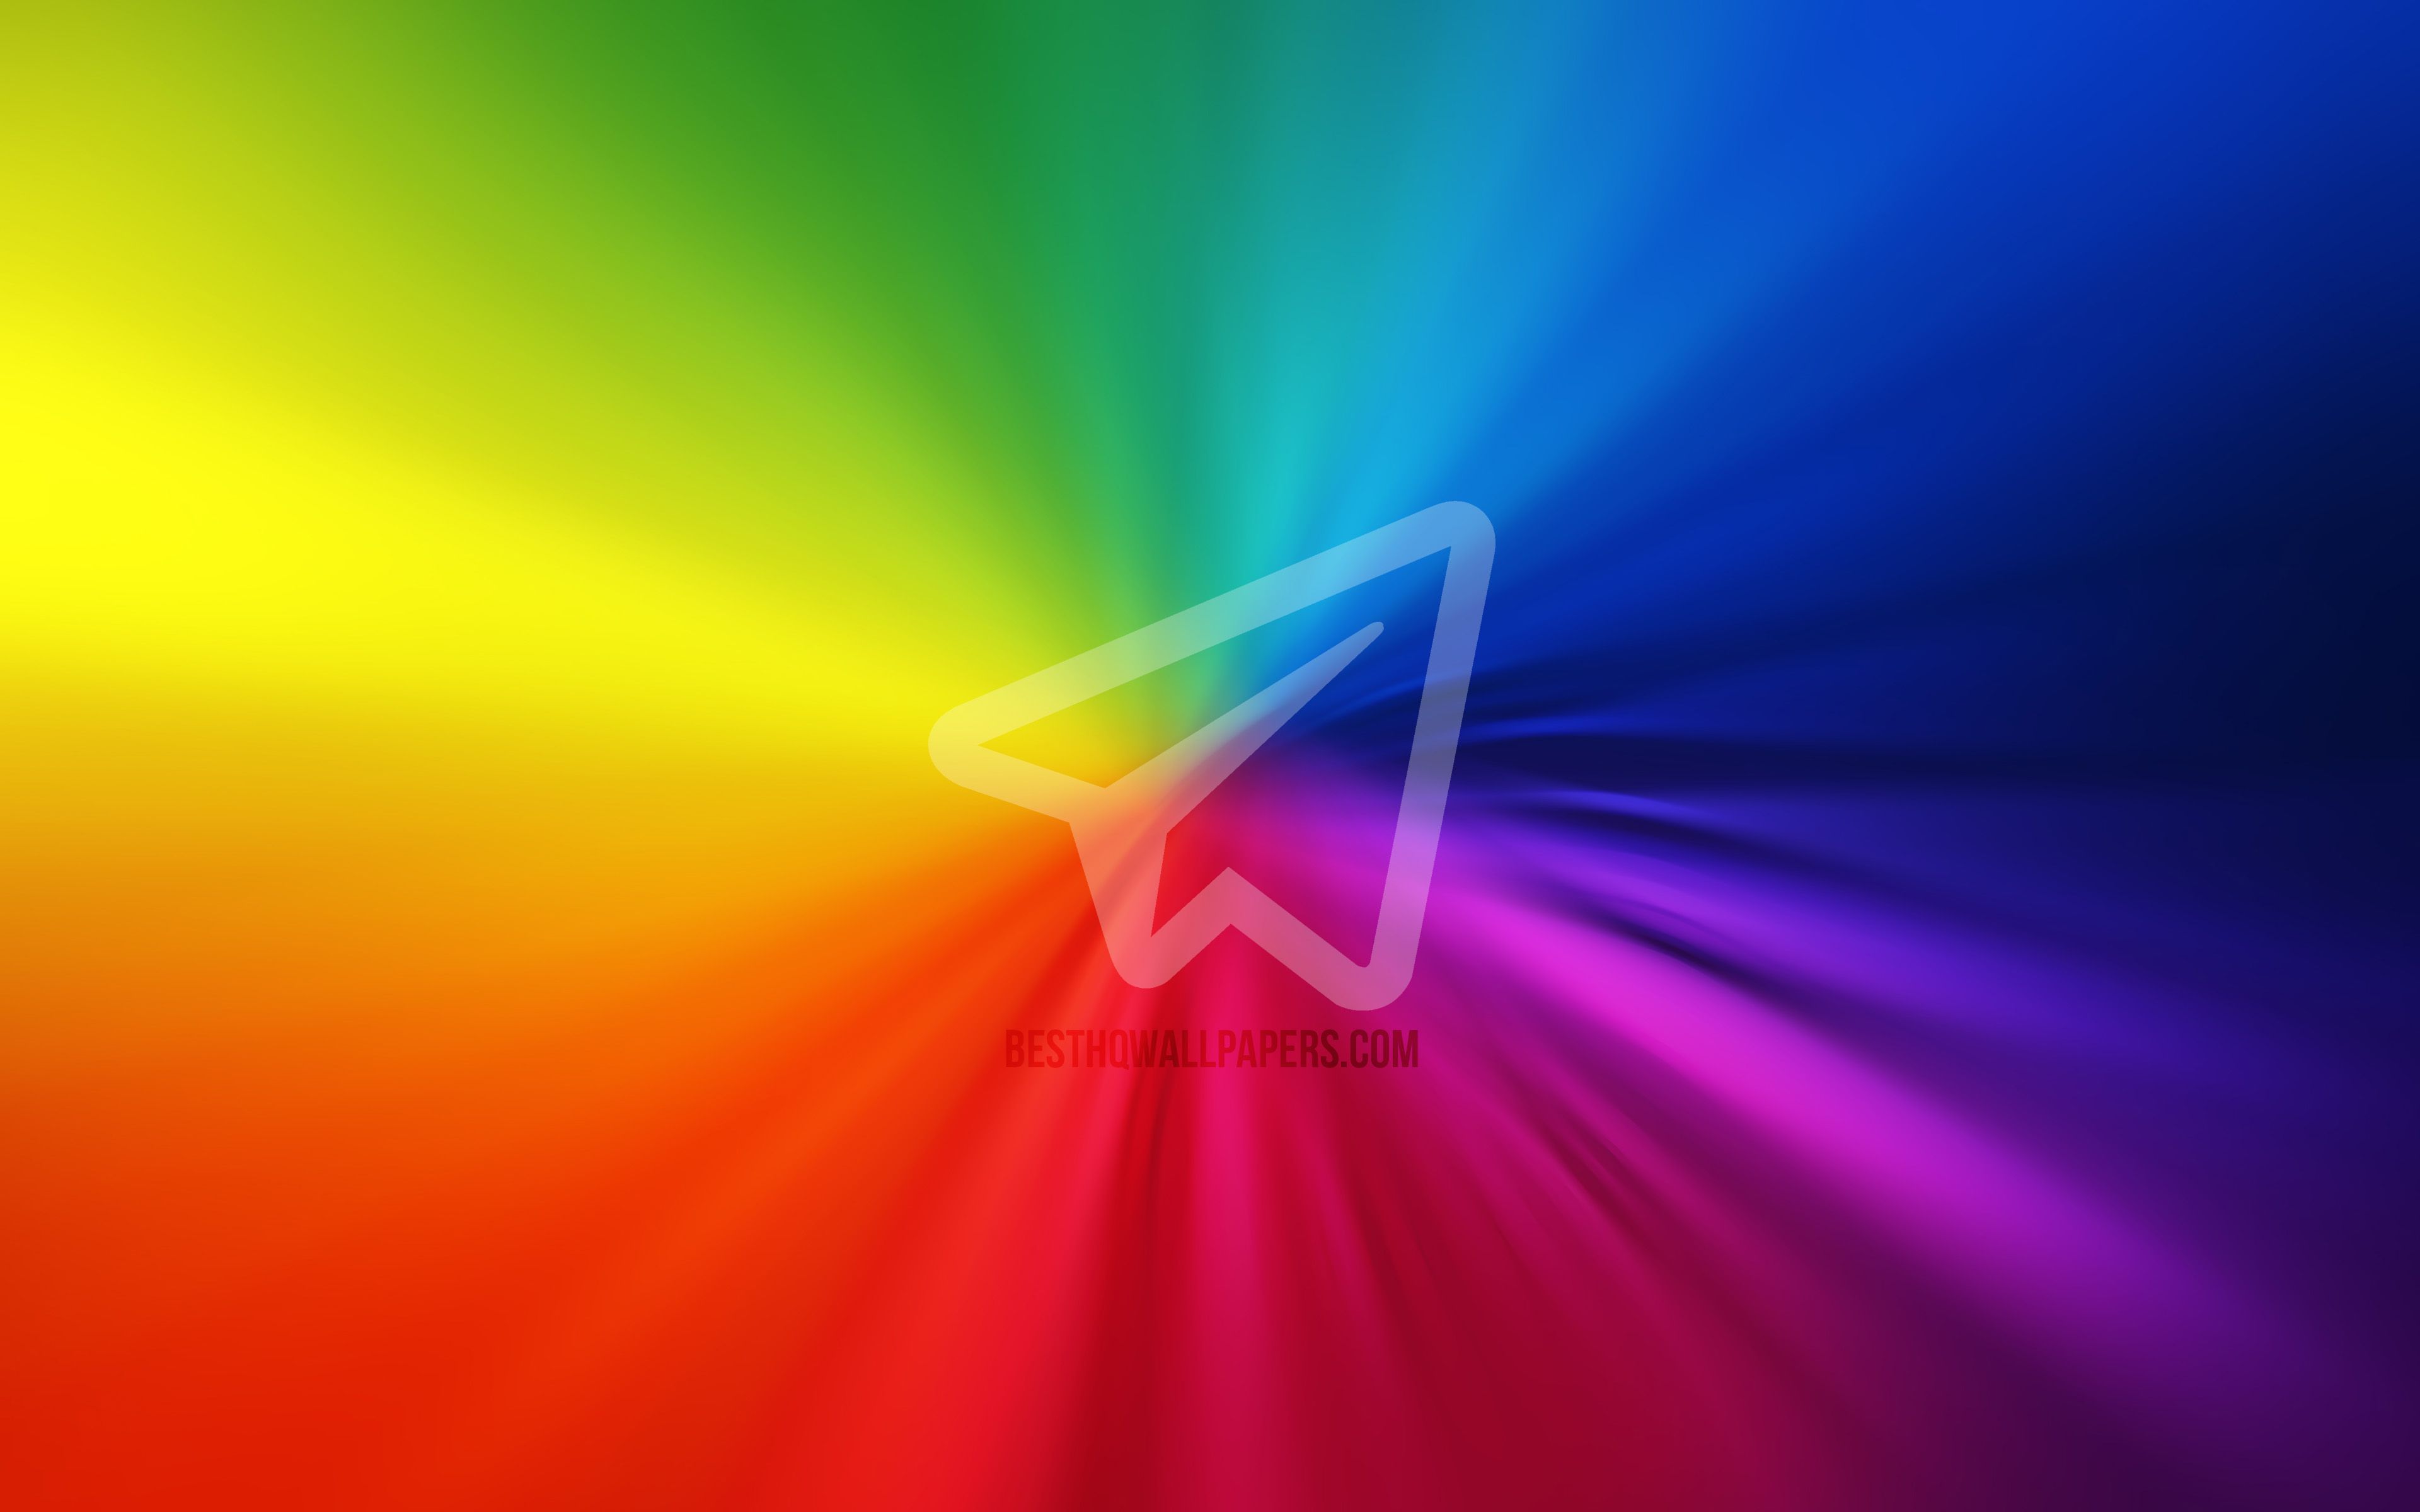 Download wallpaper Telegram logo, 4k, vortex, social networks, rainbow background, creative, artwork, brands, Telegram for desktop with resolution 3840x2400. High Quality HD picture wallpaper